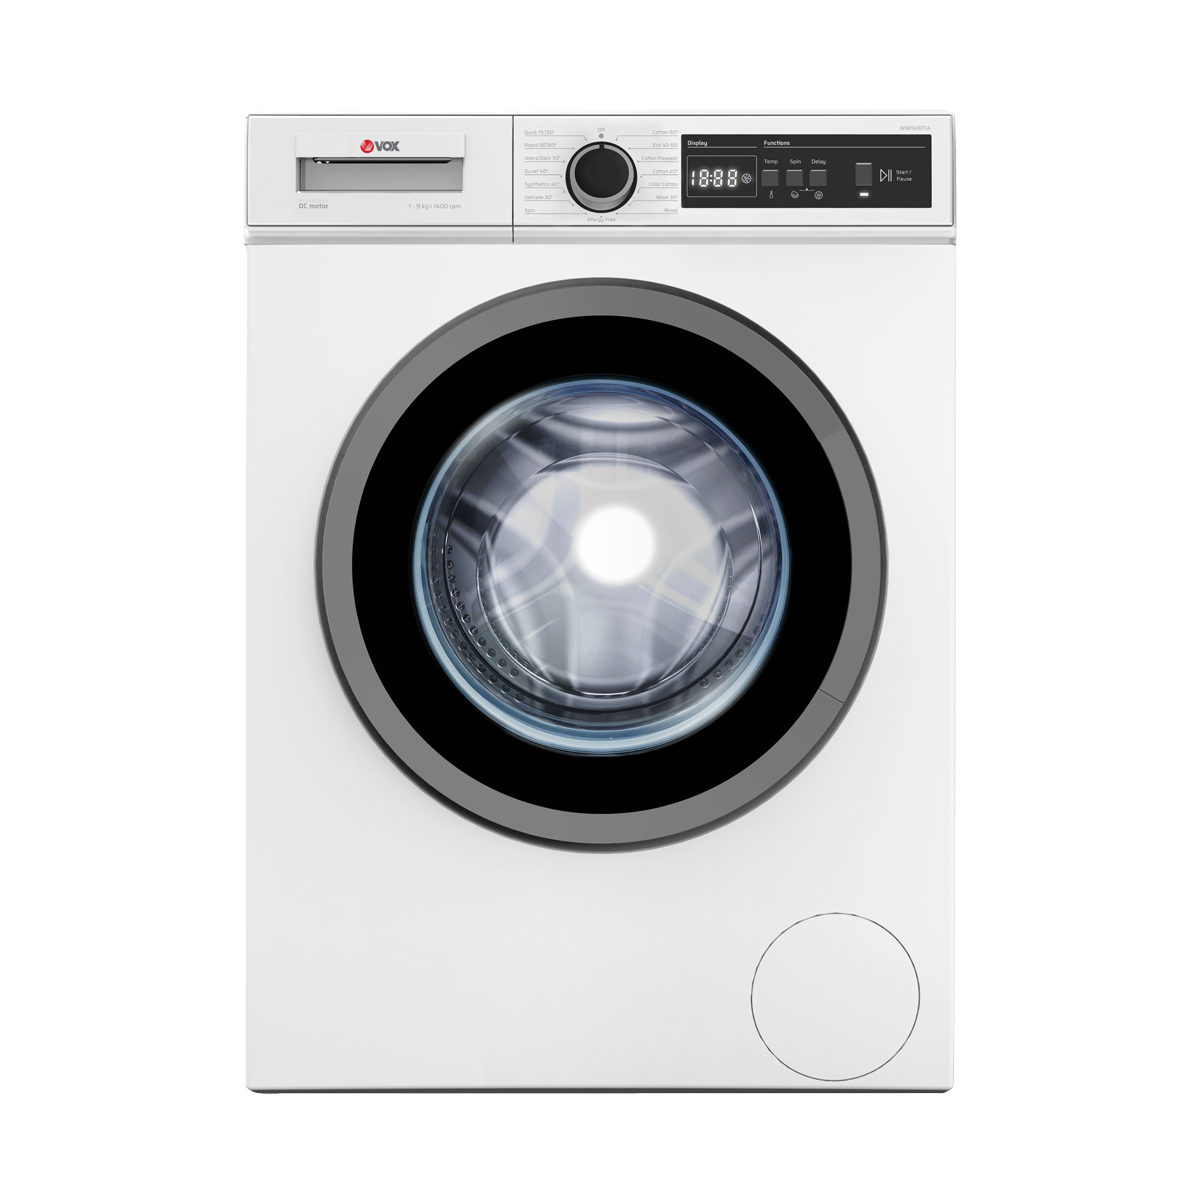 Washing machine WMI1490-TA 